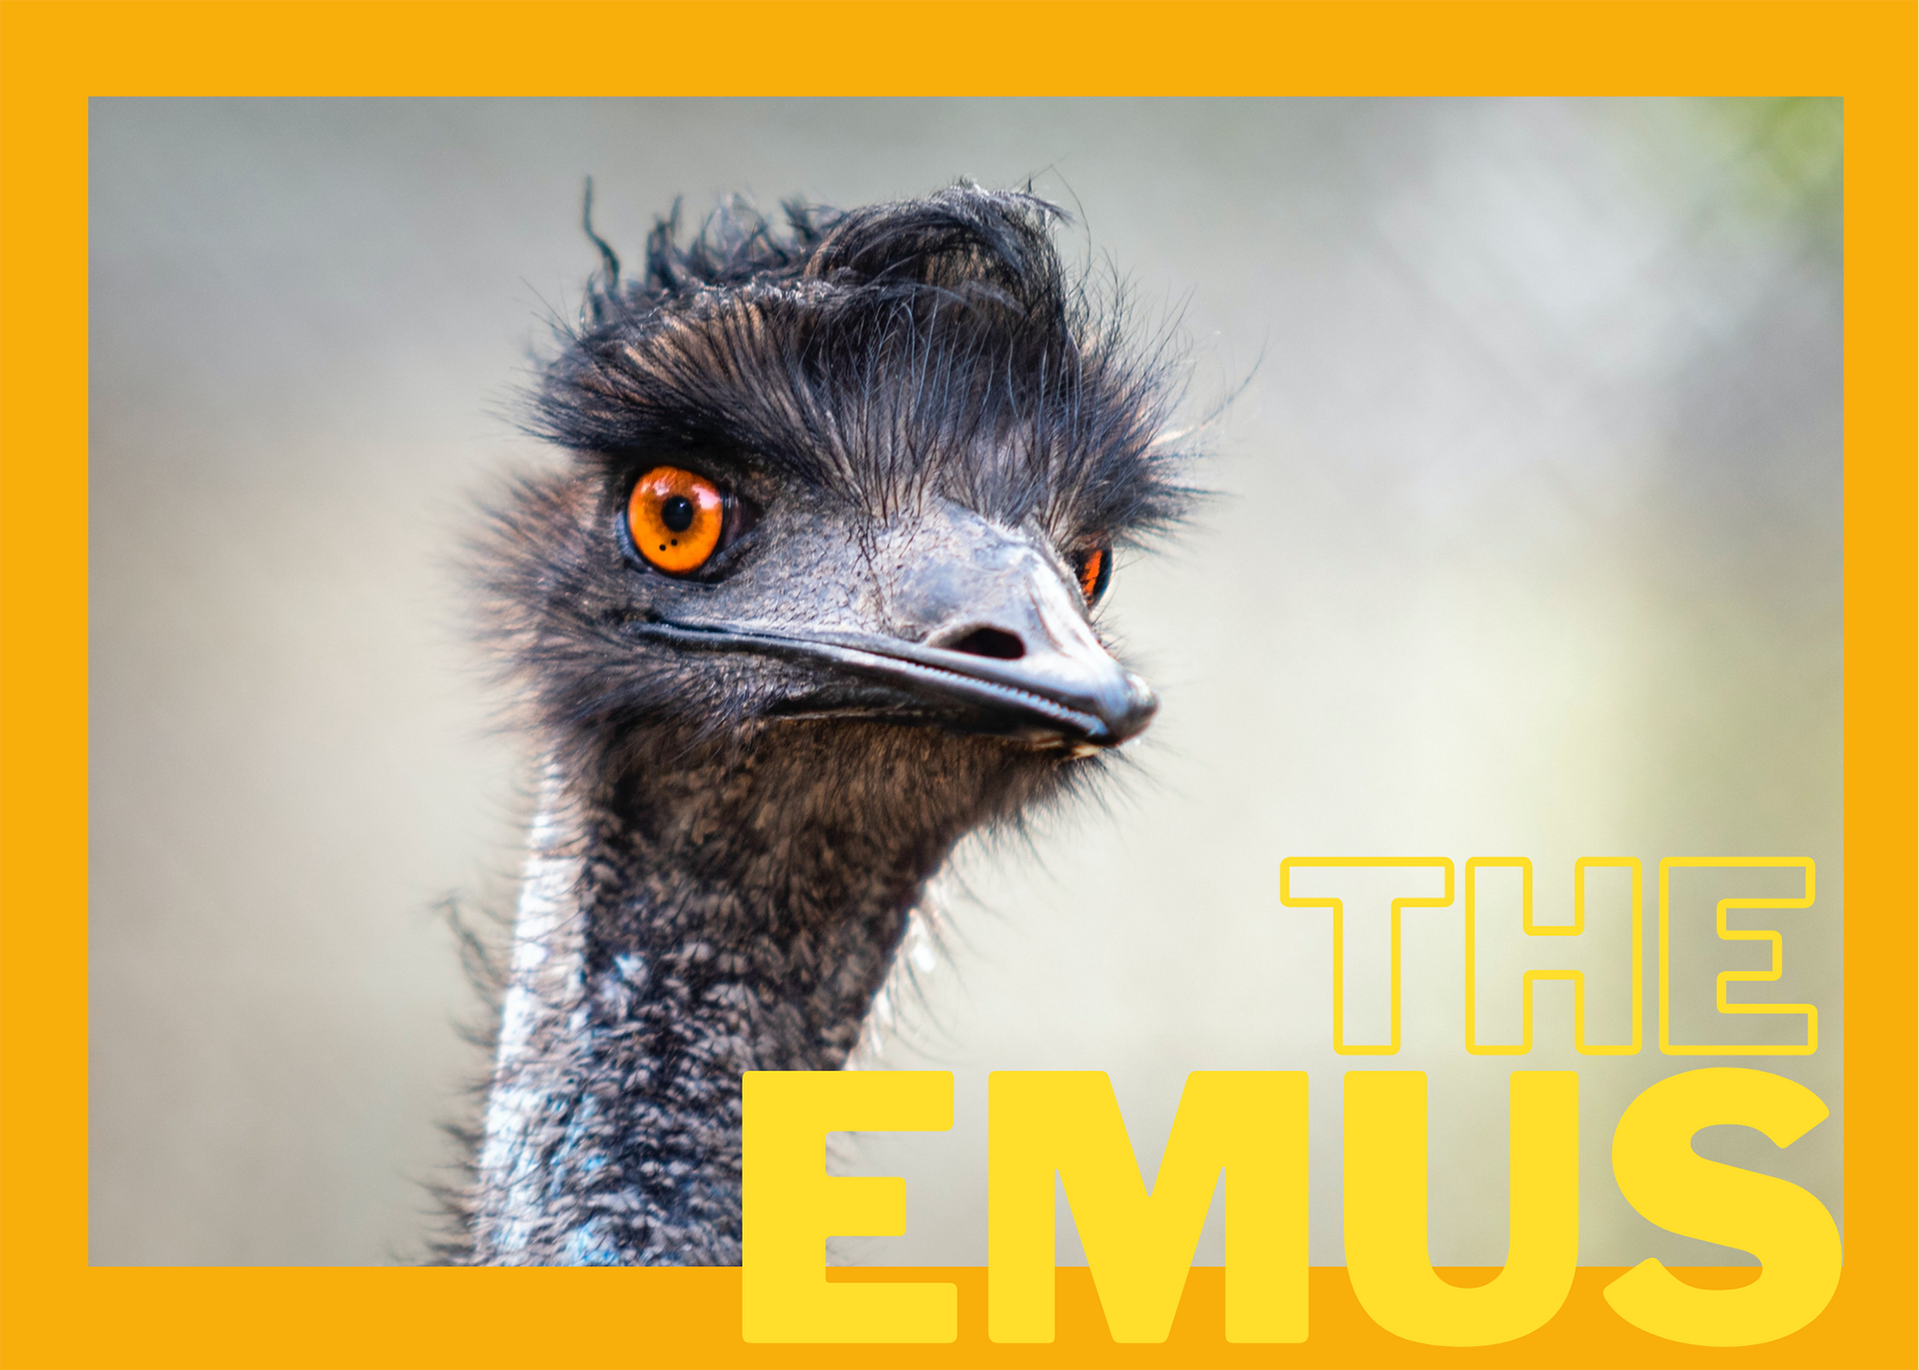 The Emus